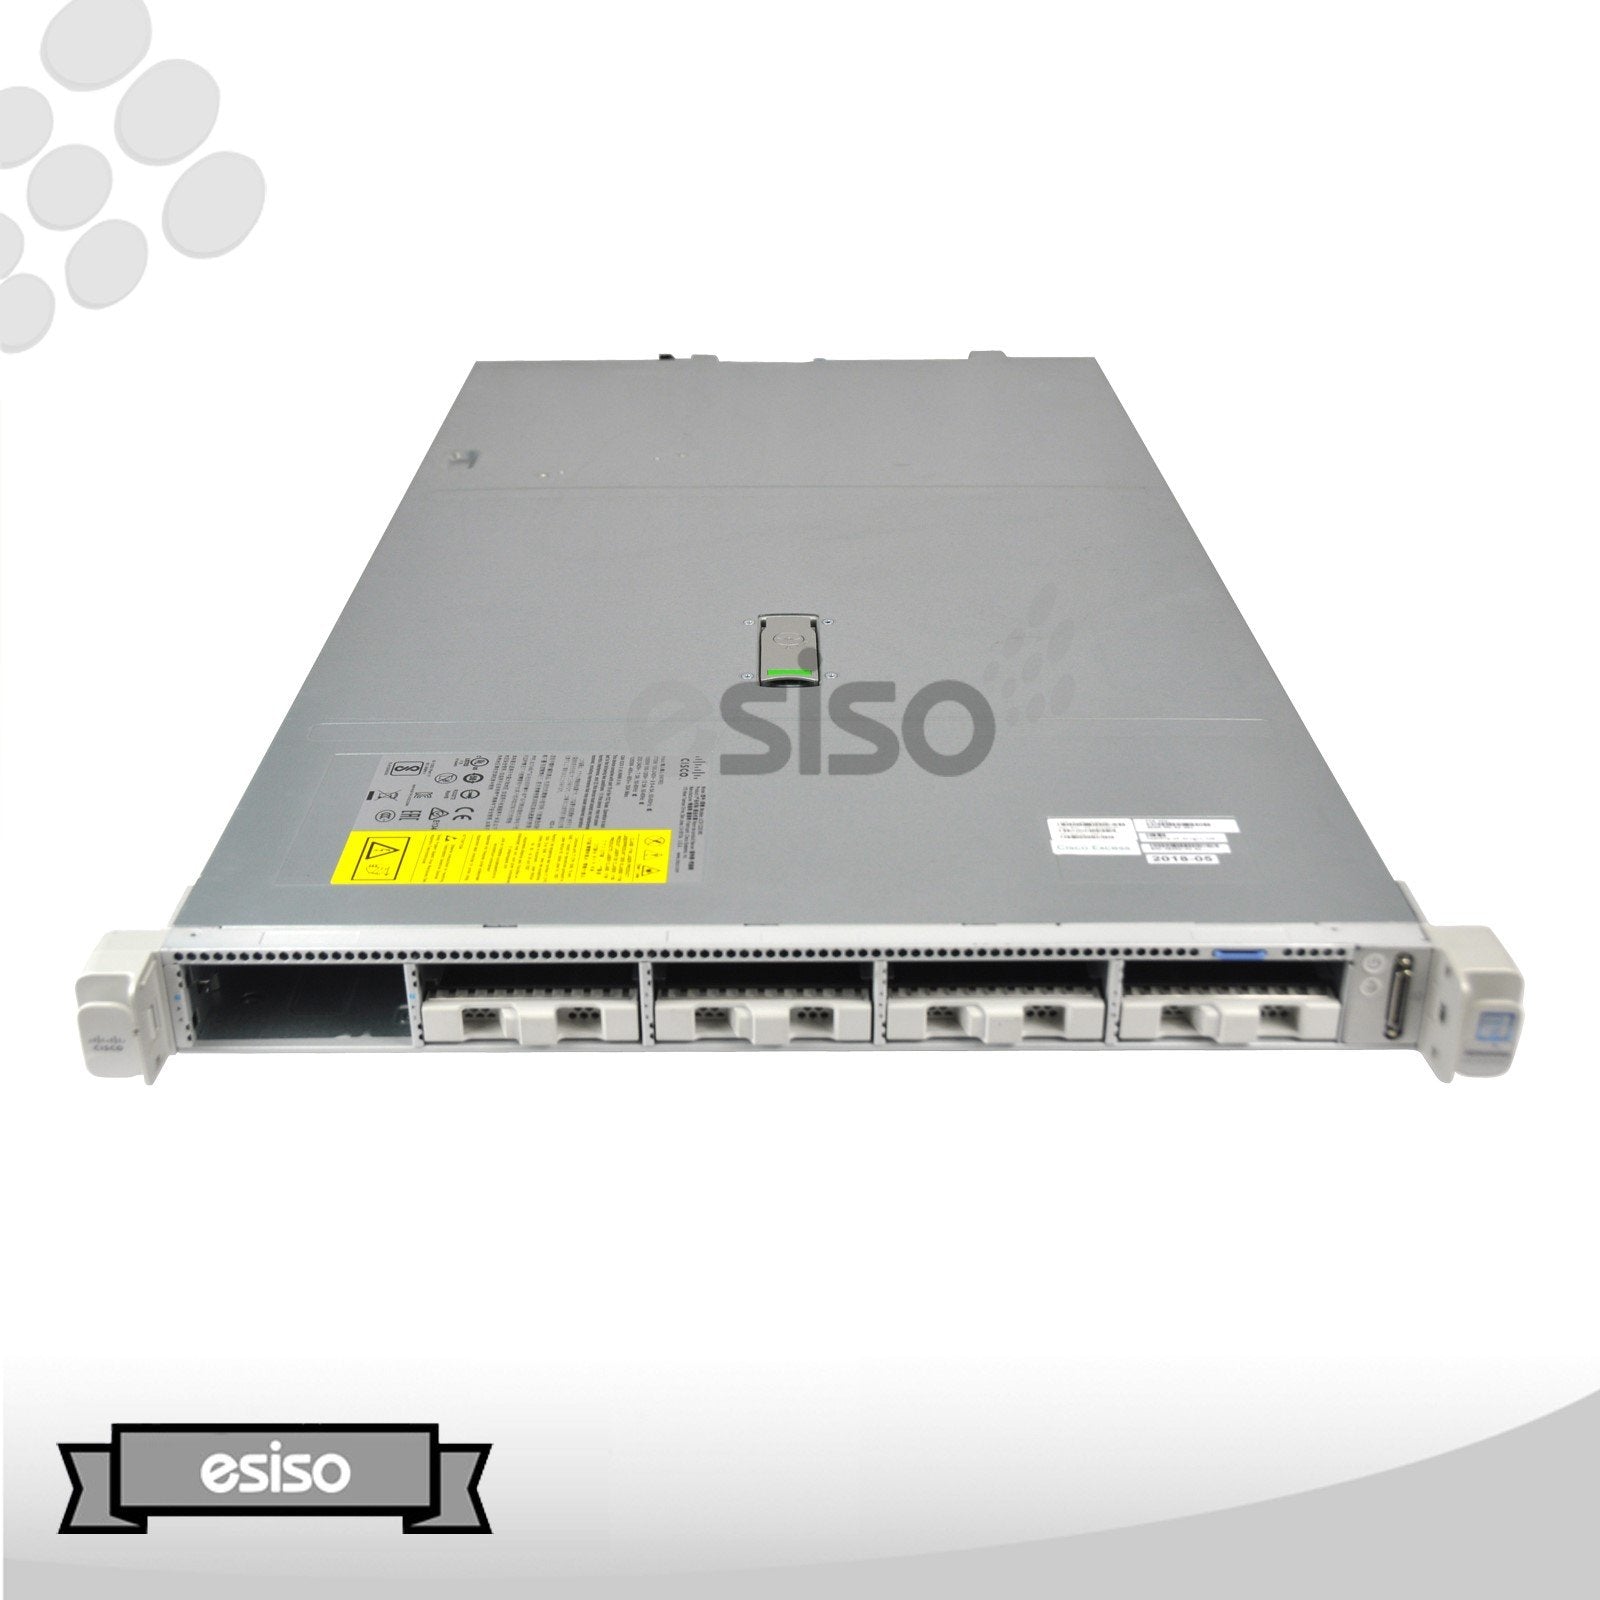 CISCO UCS C220 M5 10SFF SERVER 2x20C GOLD 6138 2GHz 256GB RAM 2x240GB SSD RAIL